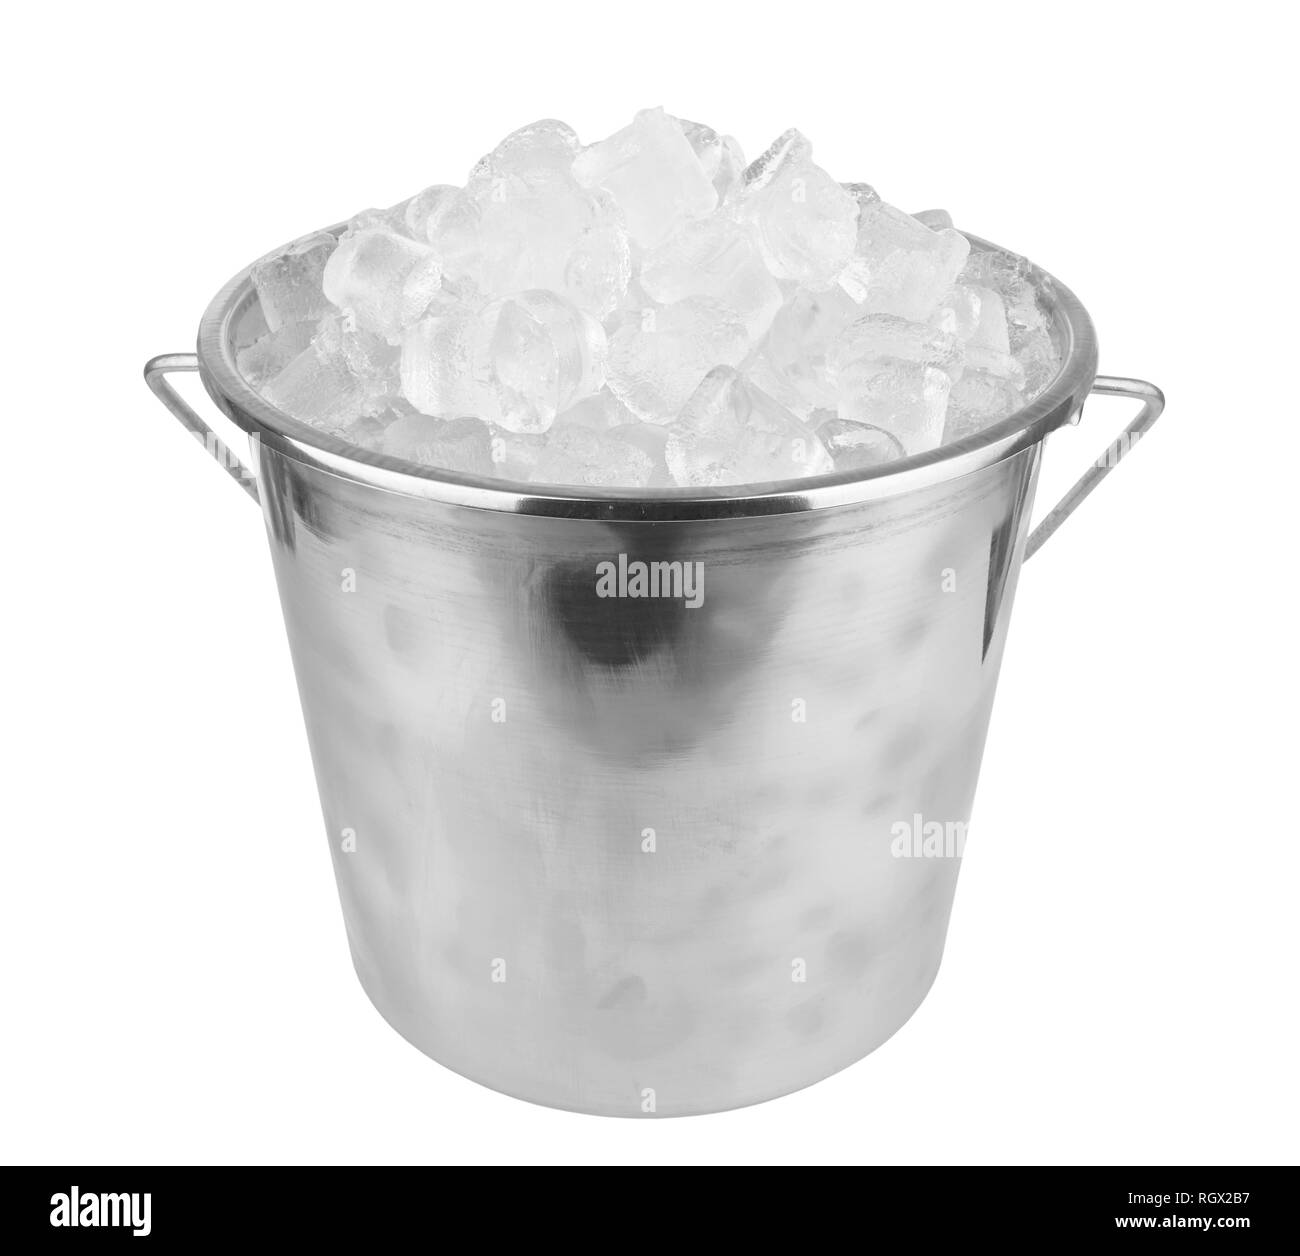 https://c8.alamy.com/comp/RGX2B7/ice-bucket-isolated-on-a-white-background-RGX2B7.jpg